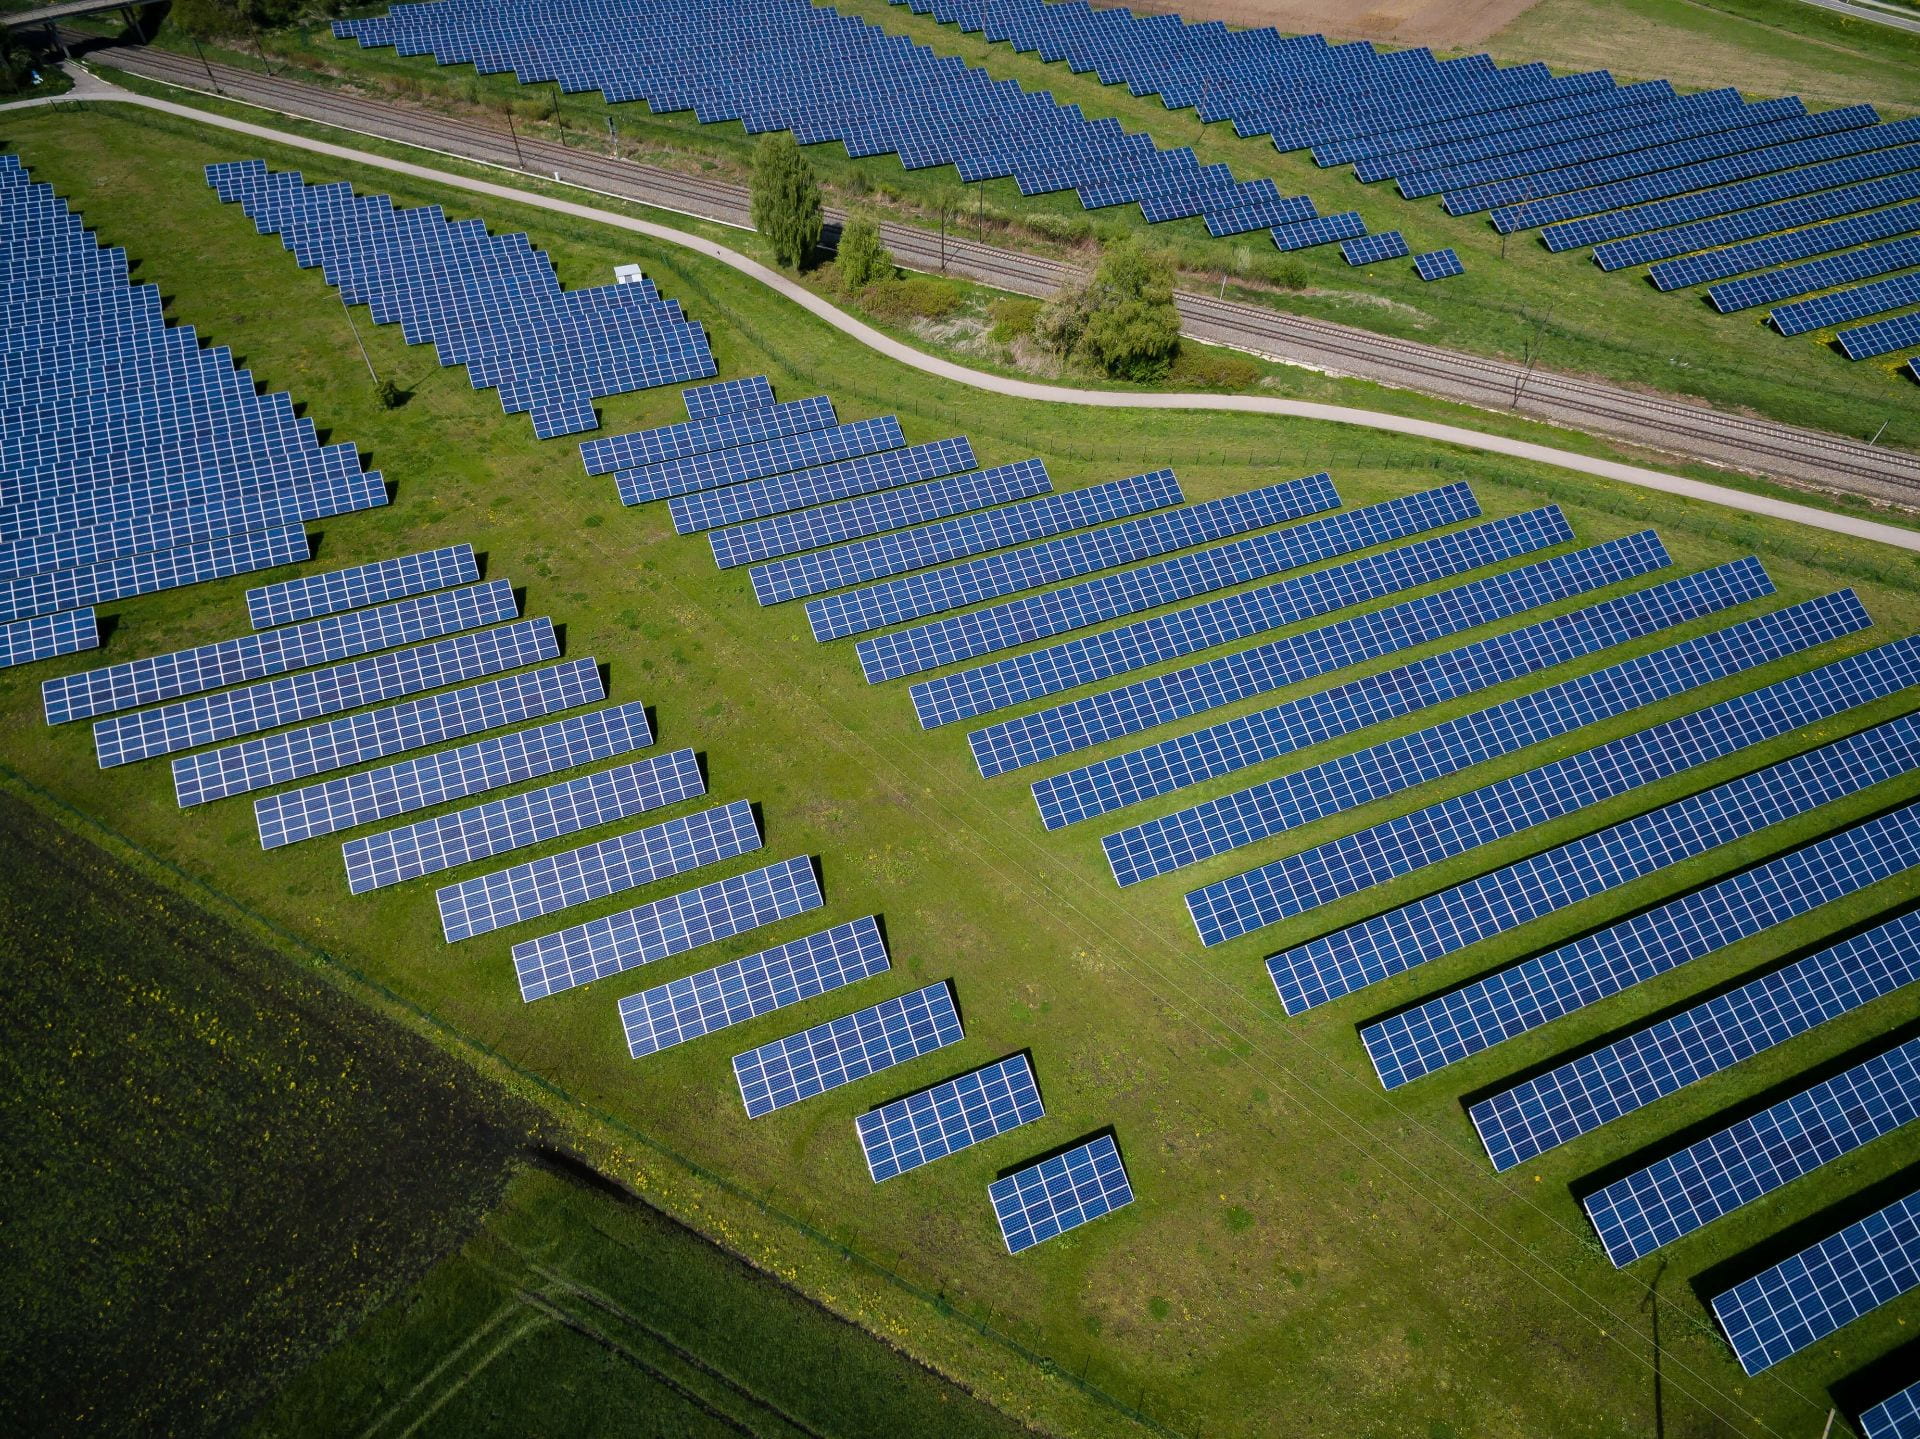 Aerial view of solar panels, road, and crop fields. Credit: Andreas Gucklhorn, Unsplash, https://unsplash.com/photos/Ilpf2eUPpUE